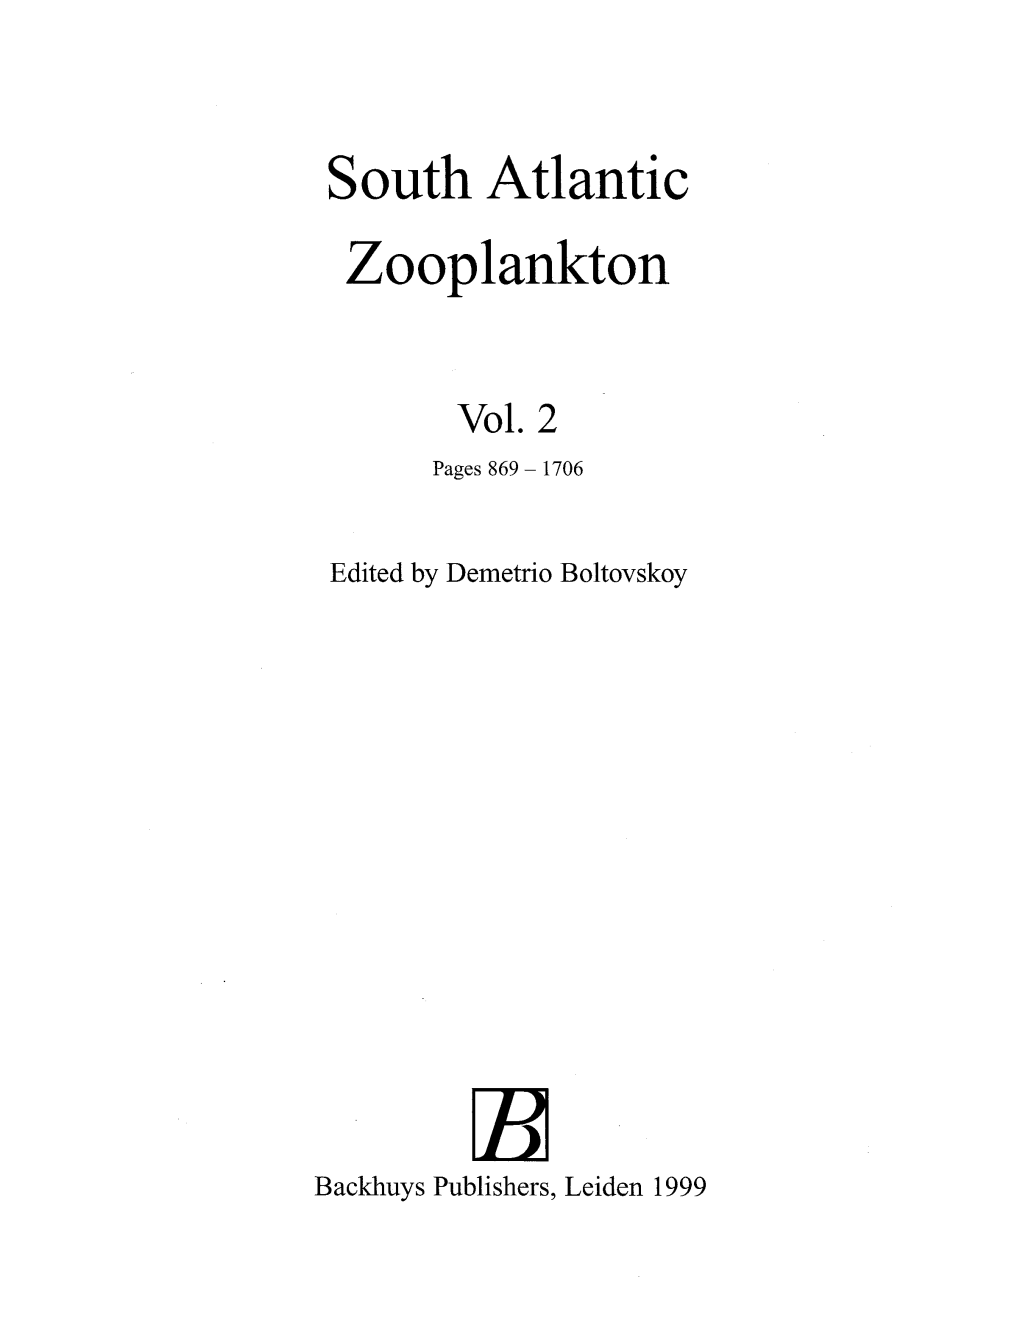 South Atlantic Zooplankton